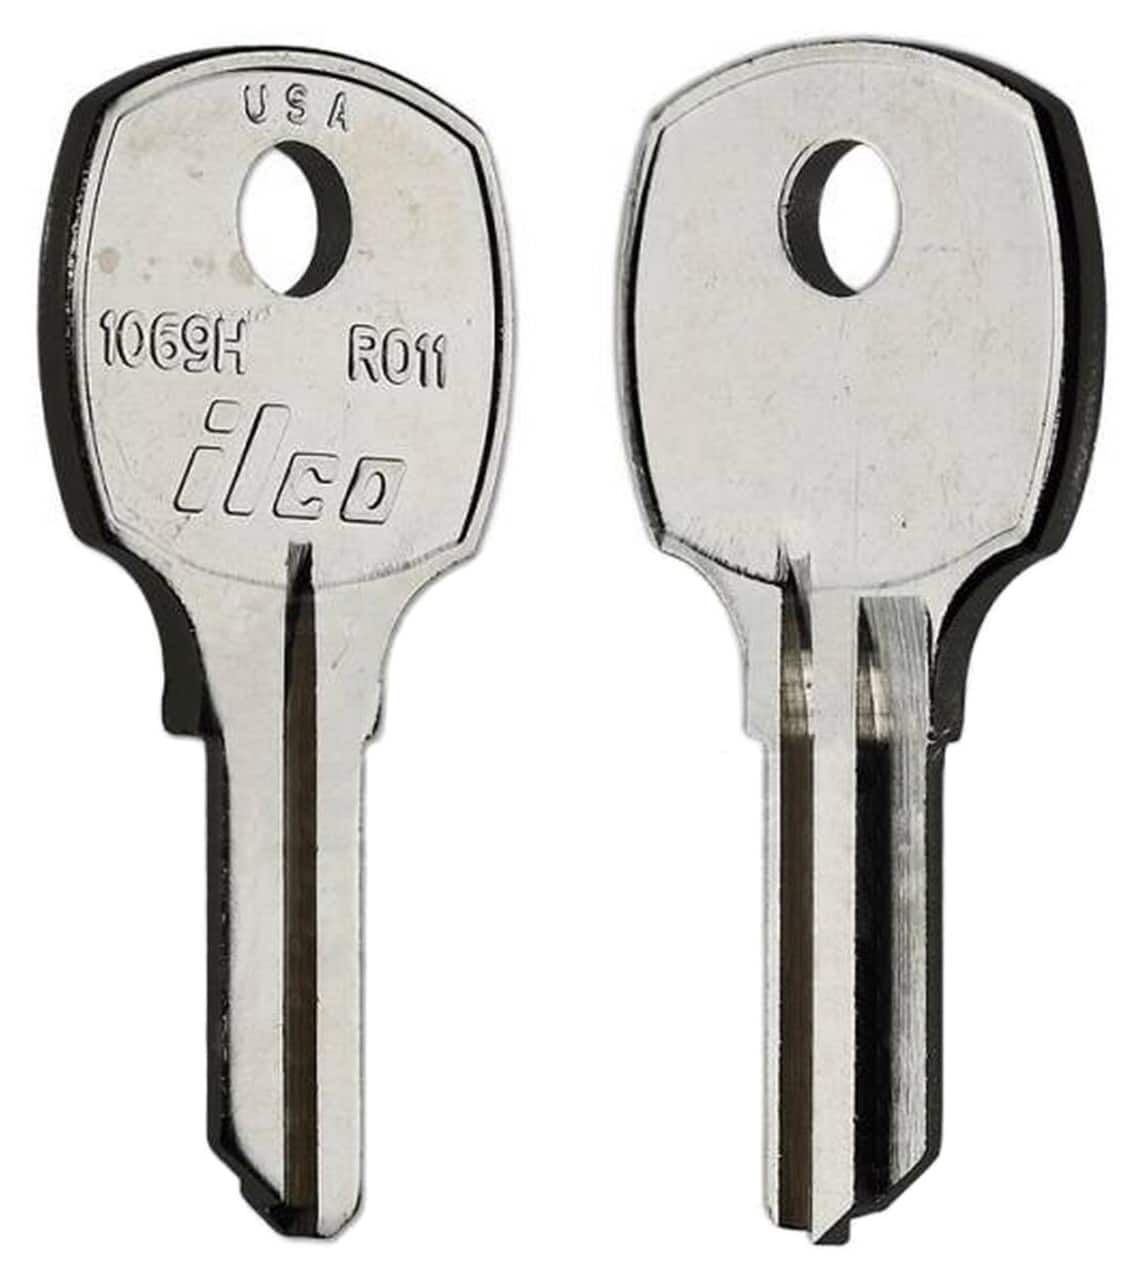 ro11 key blank